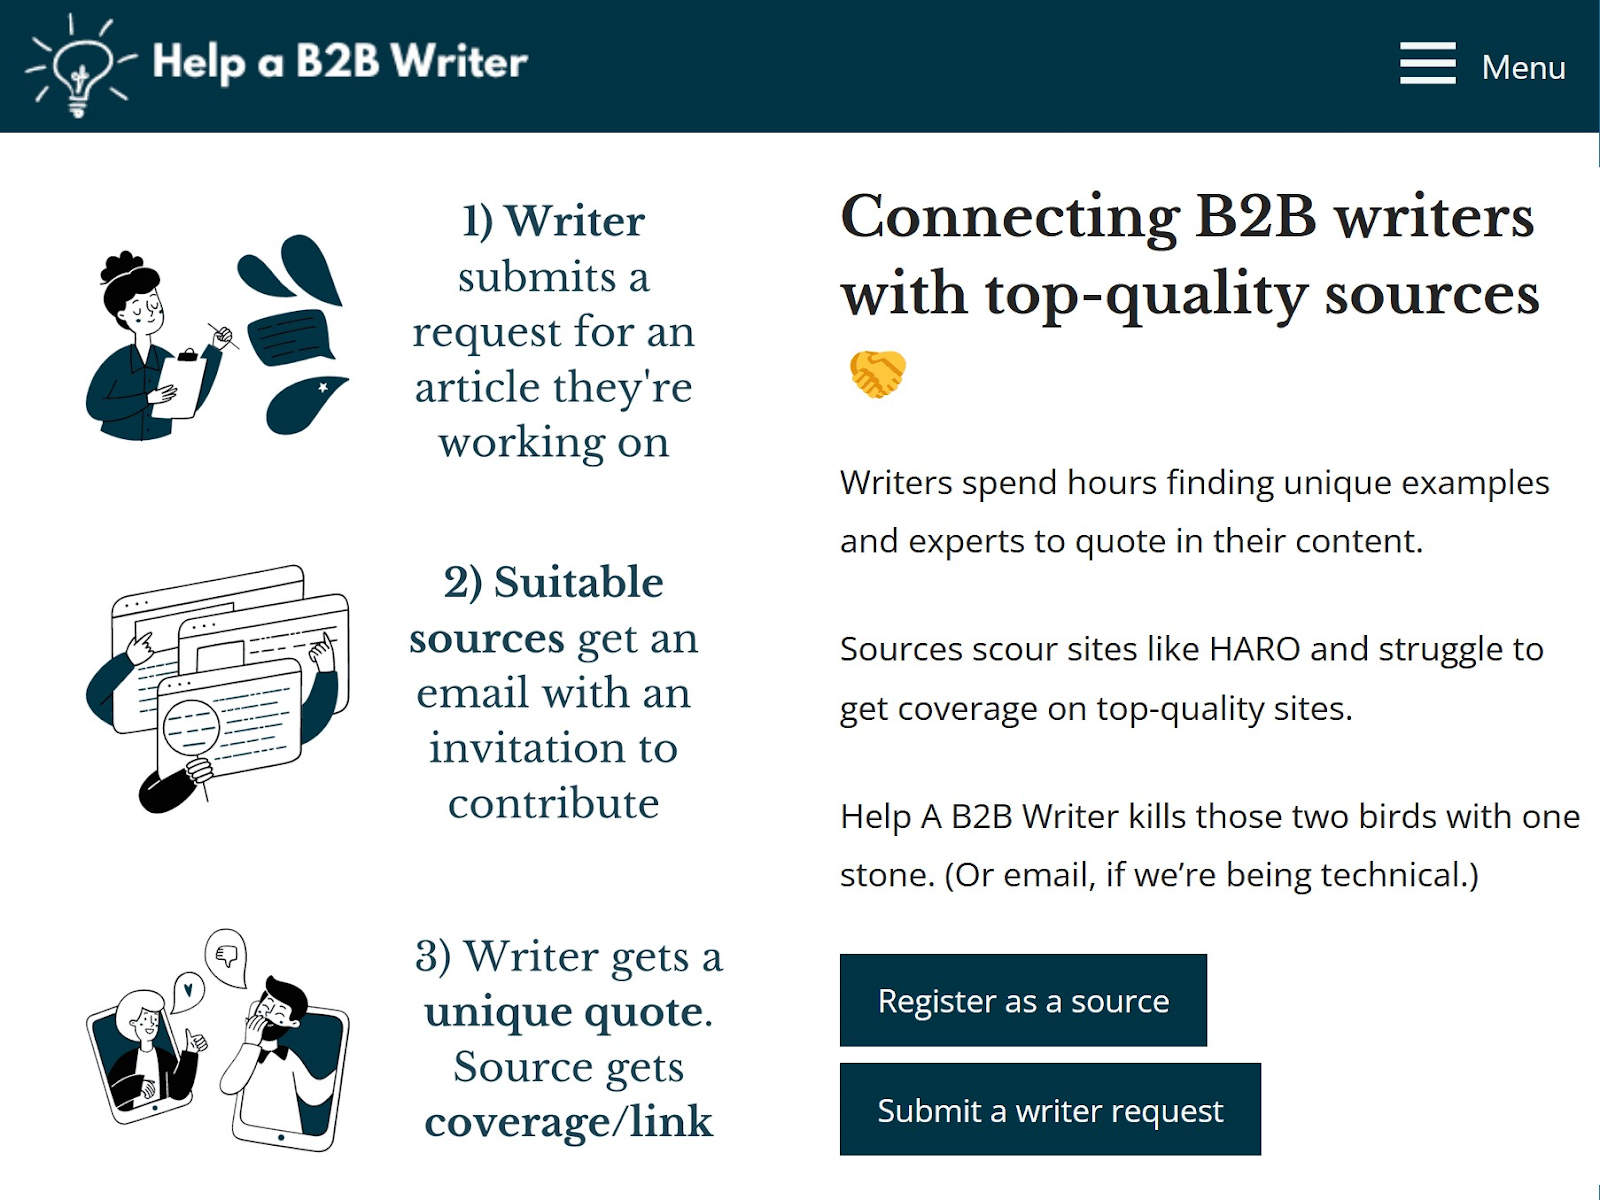 "Help a B2B Writer" landing page